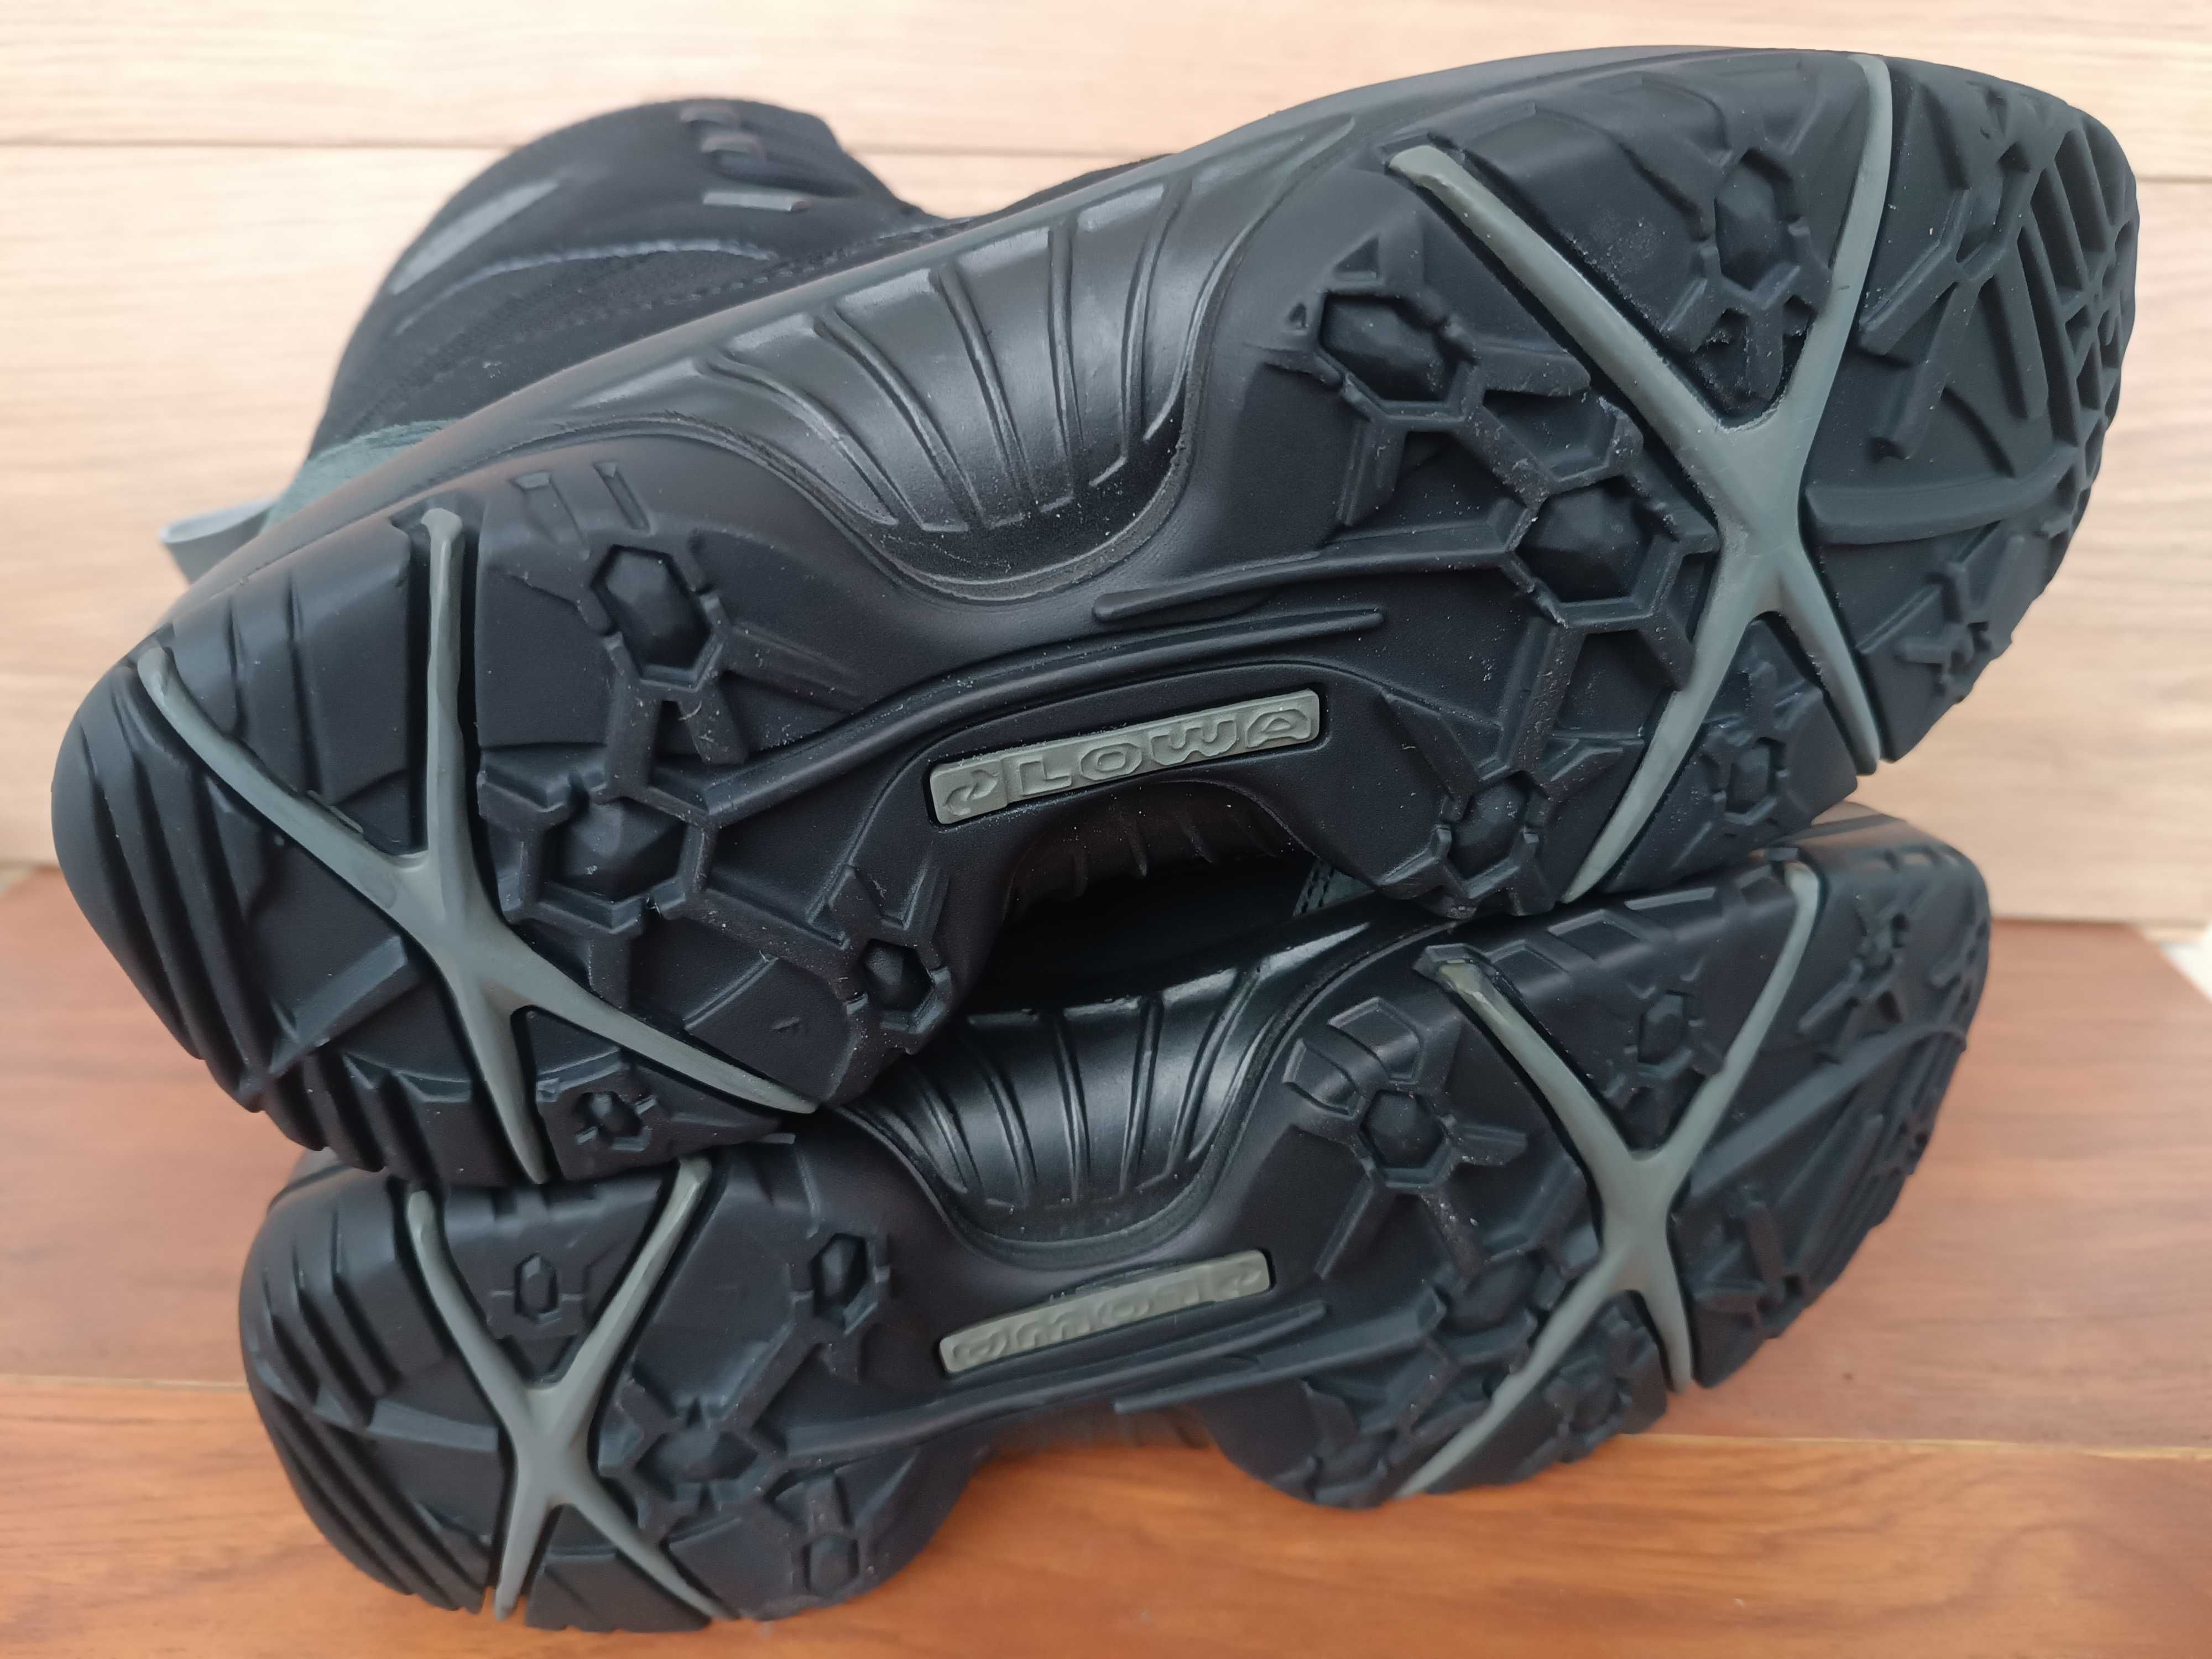 Замшевые сапоги ботинки Lowa Trident Gtx goreTex Мех 44.5 28.5см